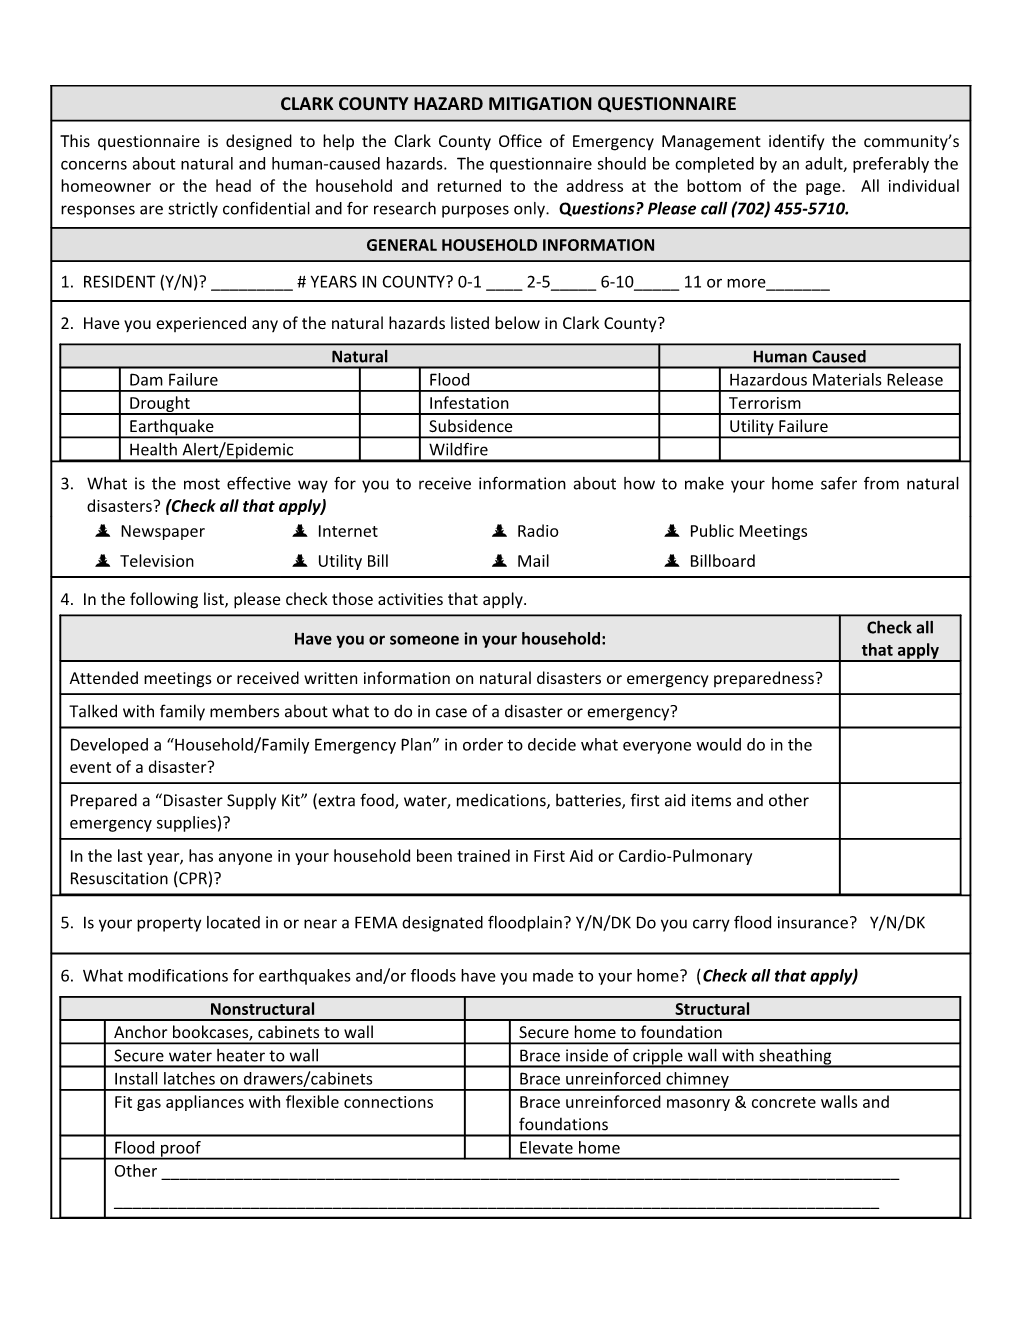 Carson City Hazard Mitigation Questionnaire